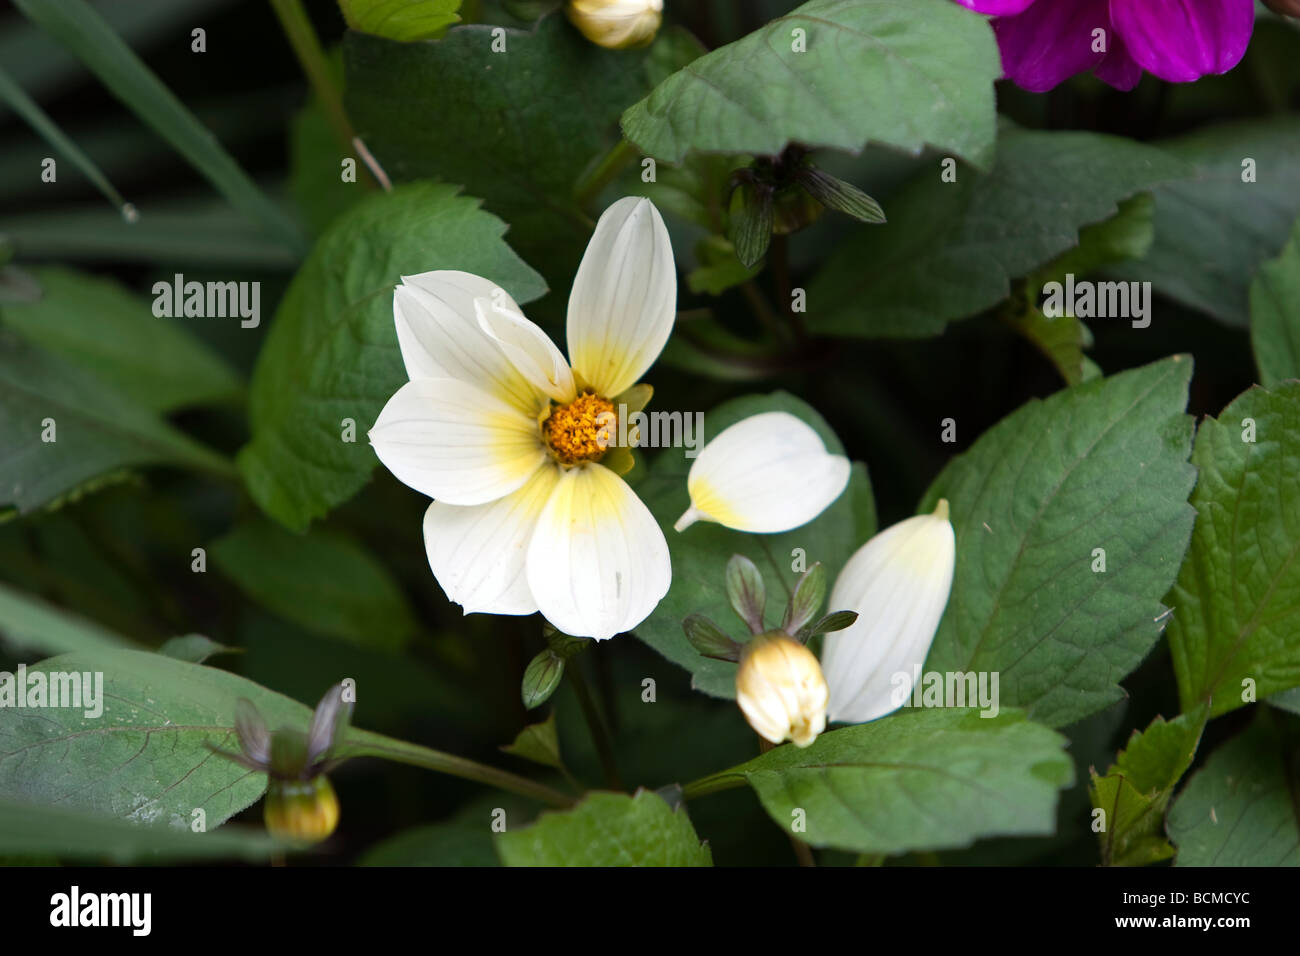 Dahlia Flower White and Yellow Stock Photo